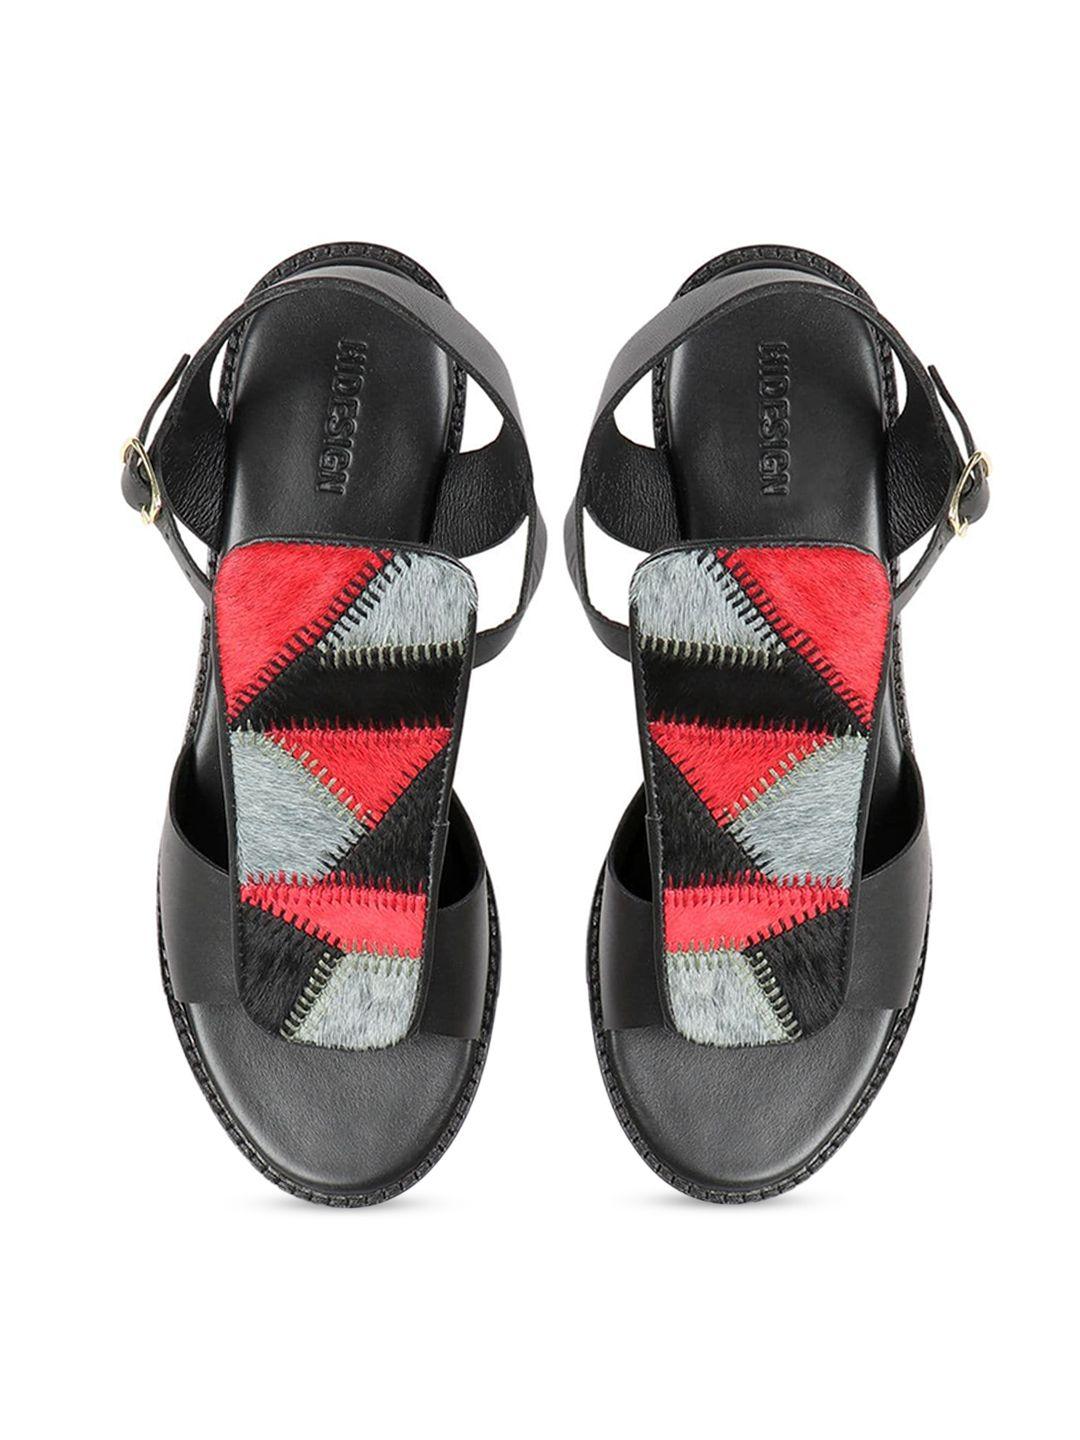 hidesign-joni-colourblocked-leather-open-toe-block-heels-with-buckle-closure